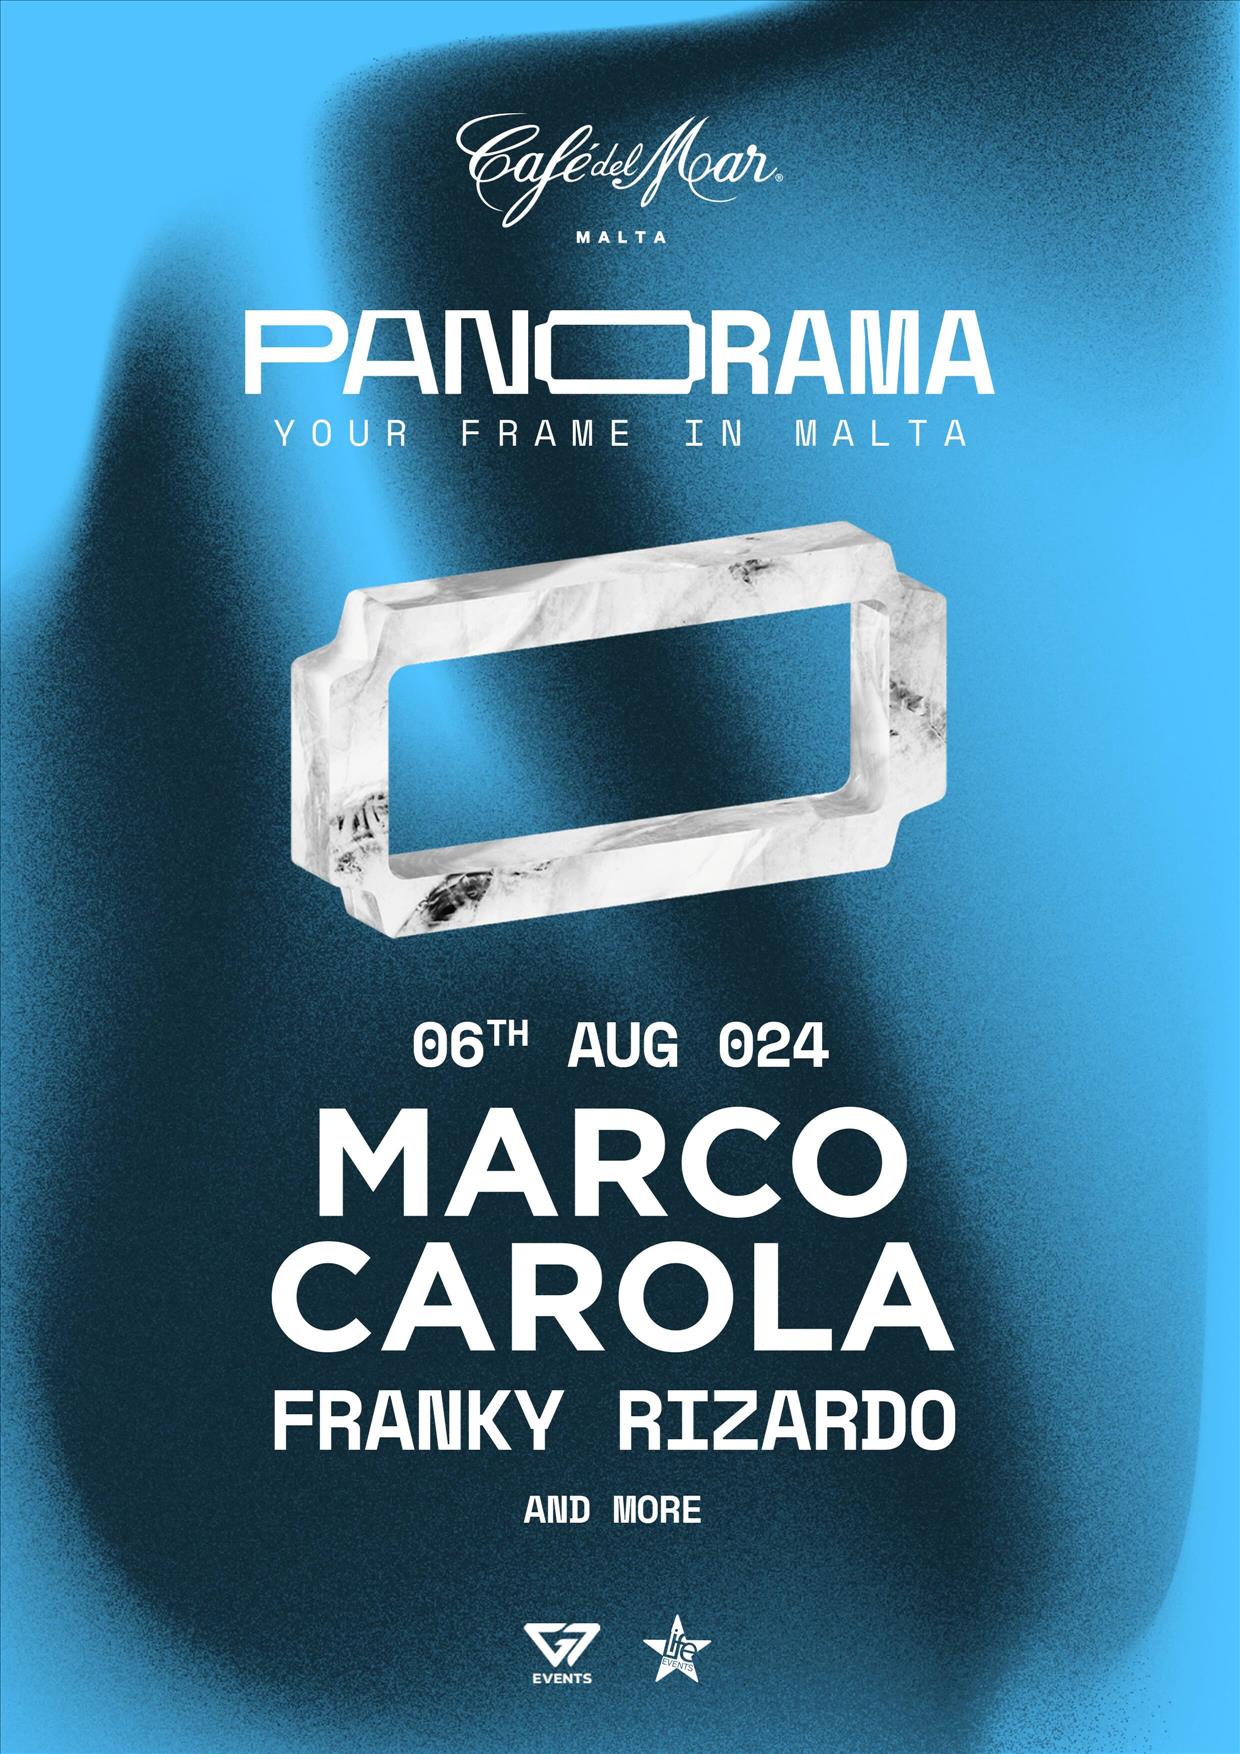 Panorama Malta presents Marco Carola at Café del Mar